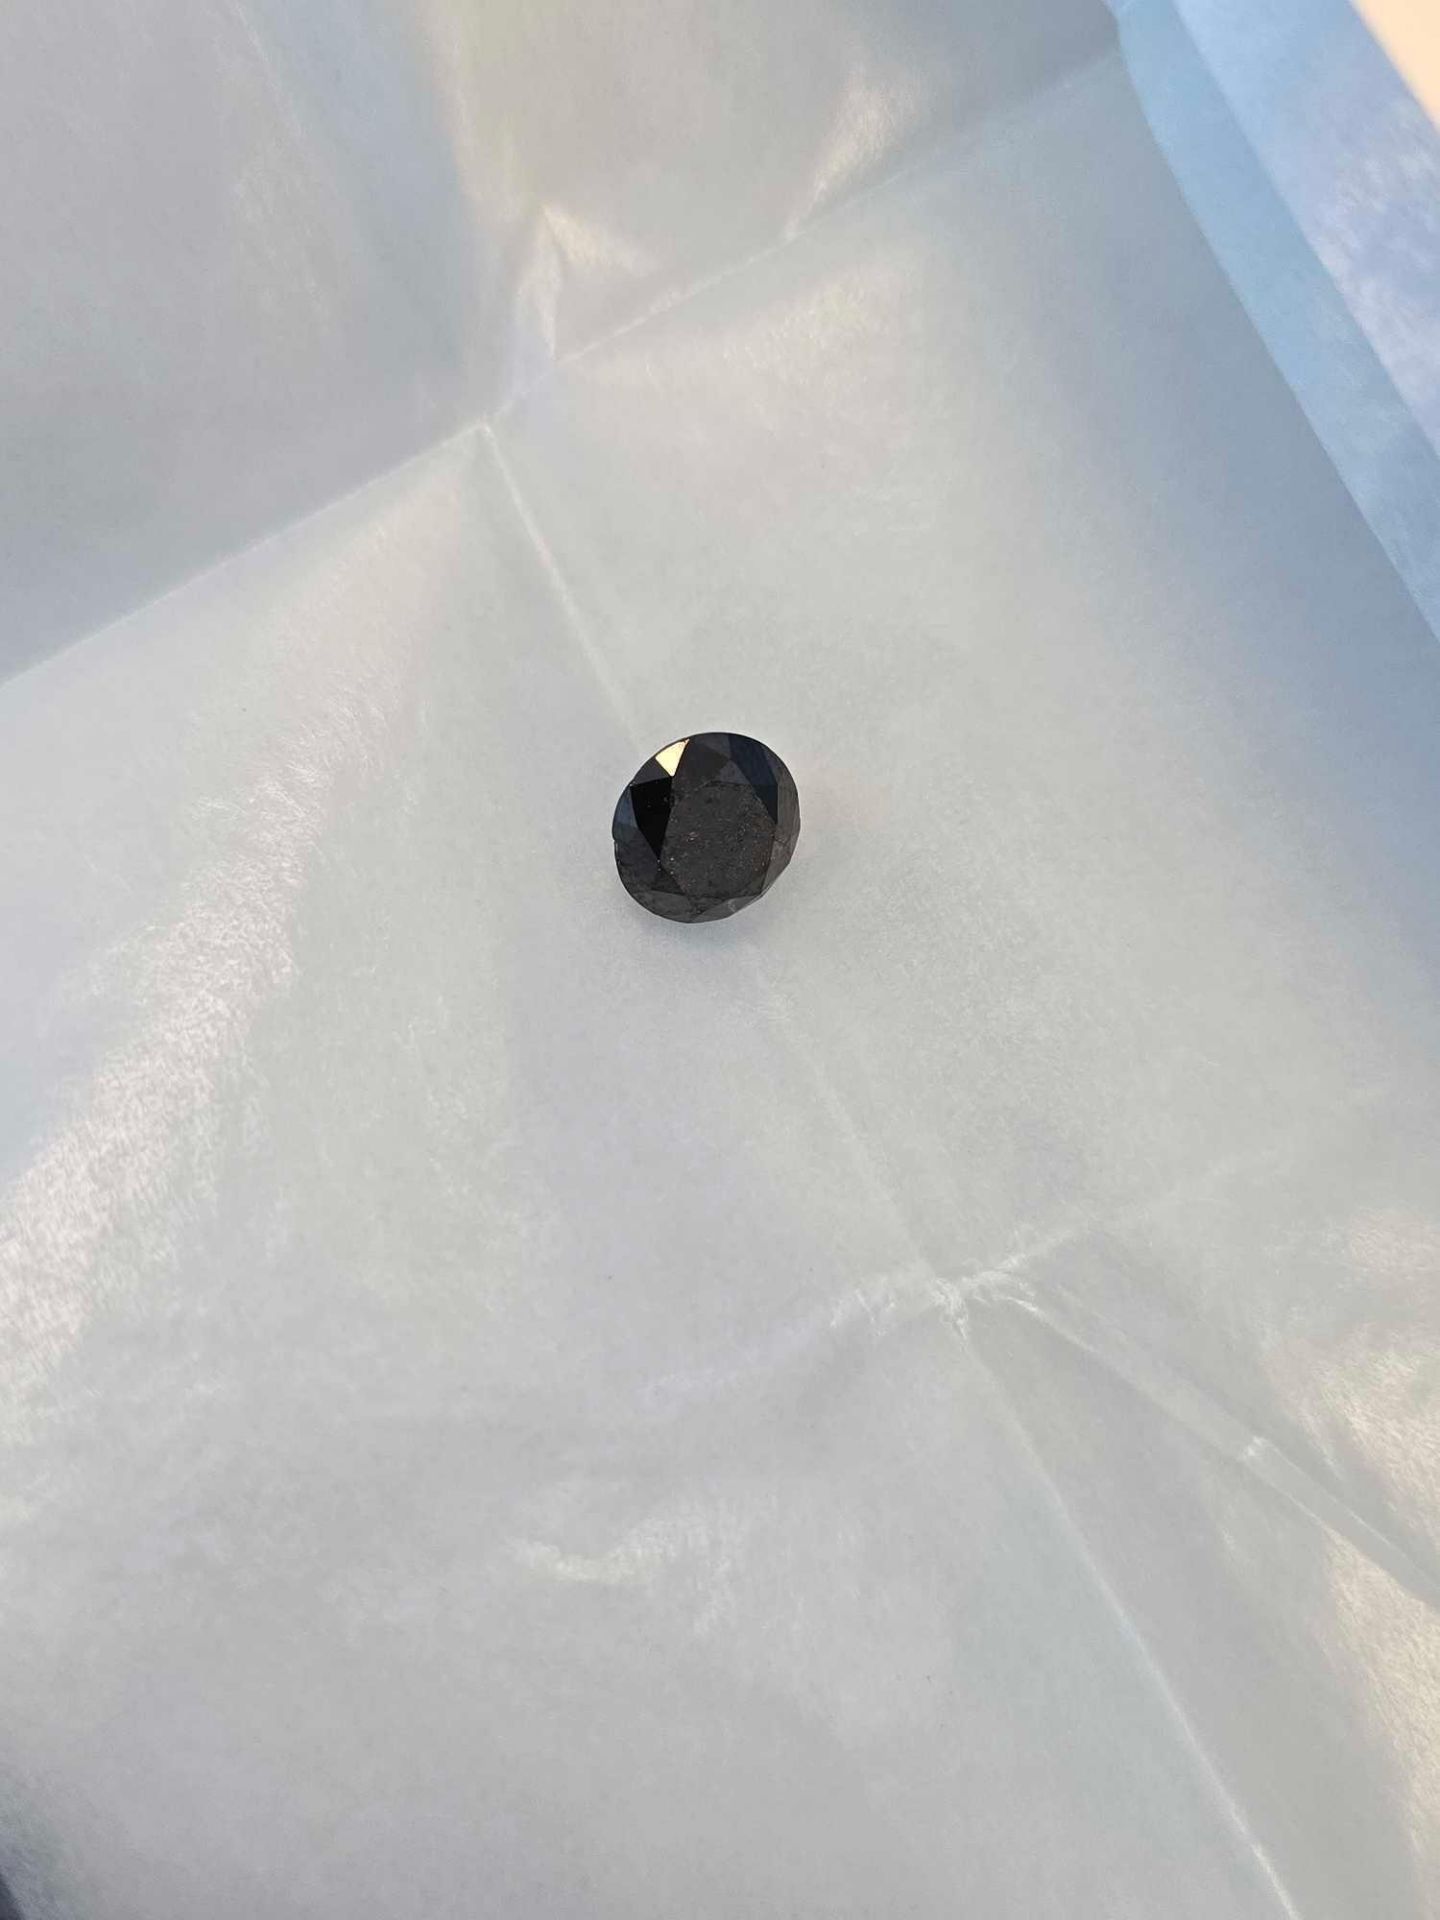 1.84 carat black diamond - Image 6 of 6